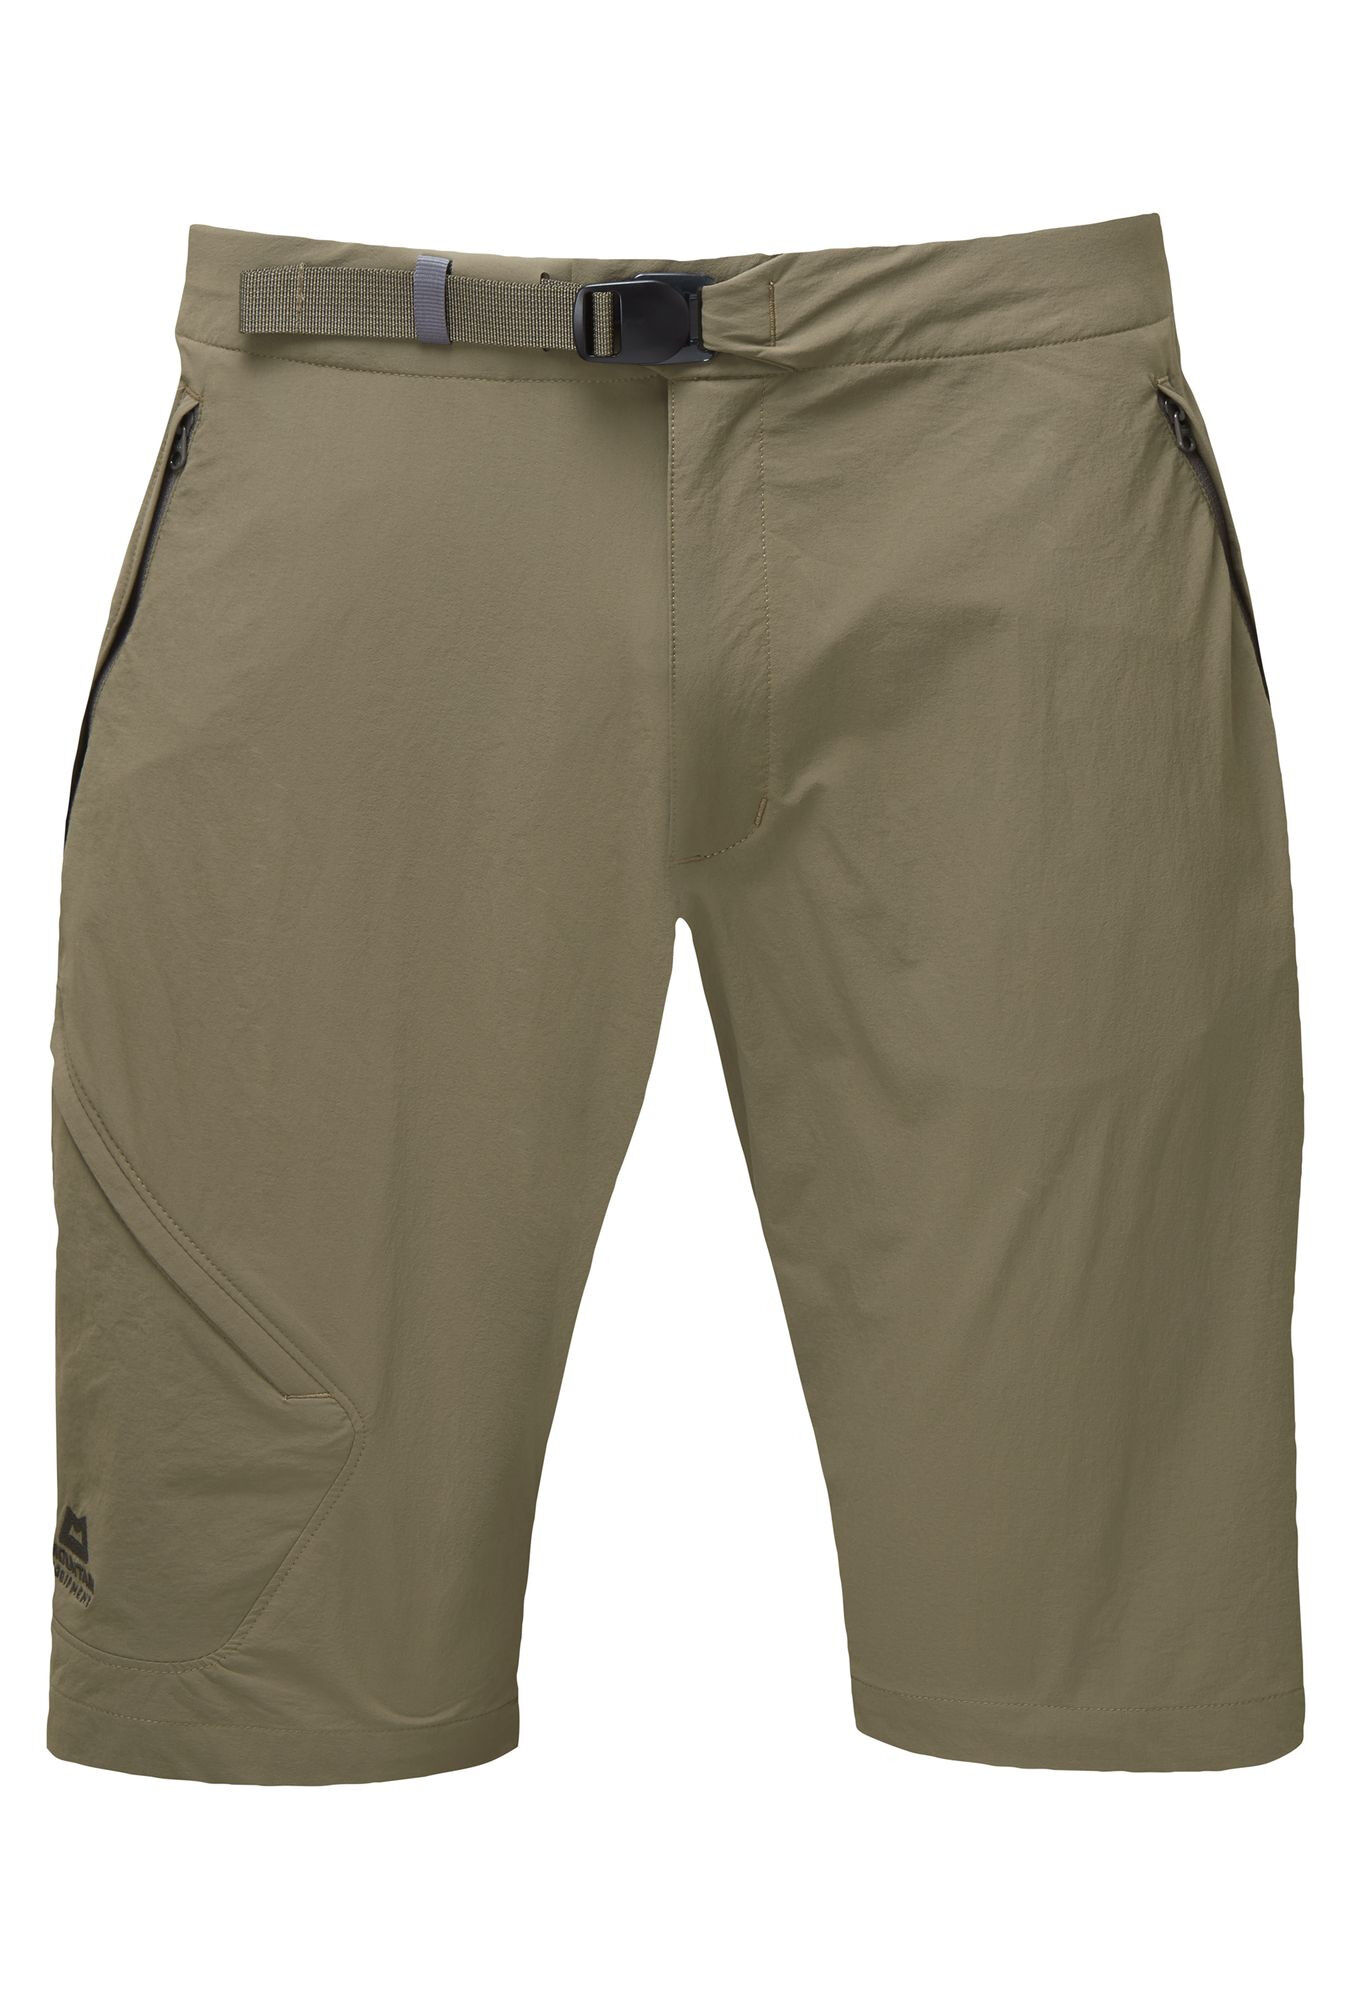 Mountain Equipment Comici Short - Climbing shorts - Men's | Hardloop